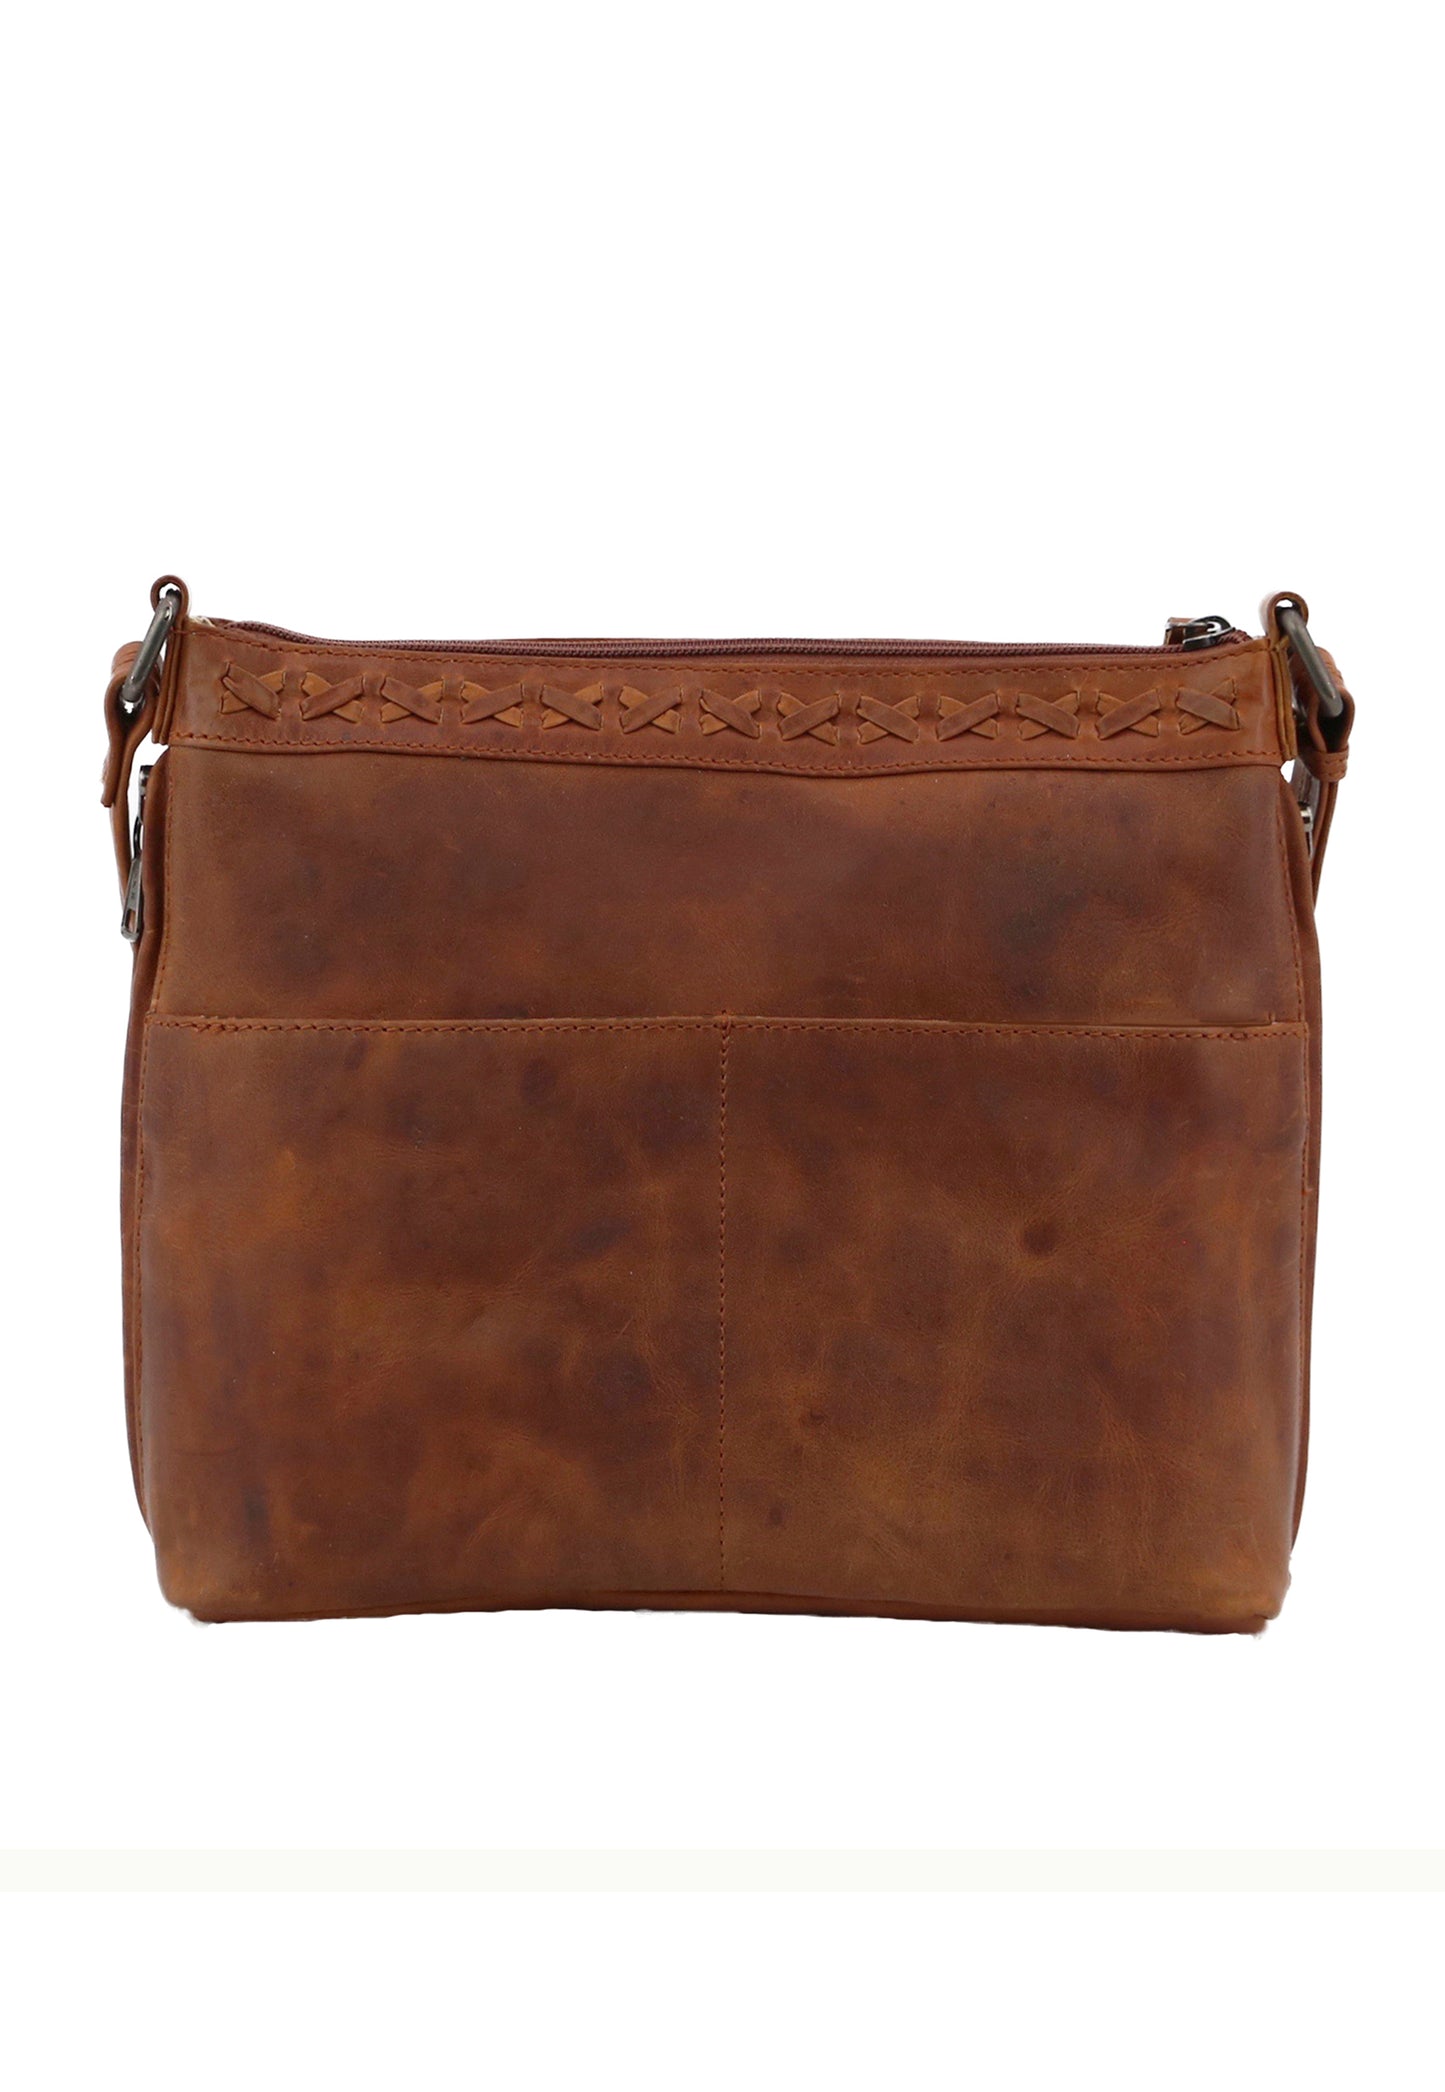 Brown leather gun purse side view